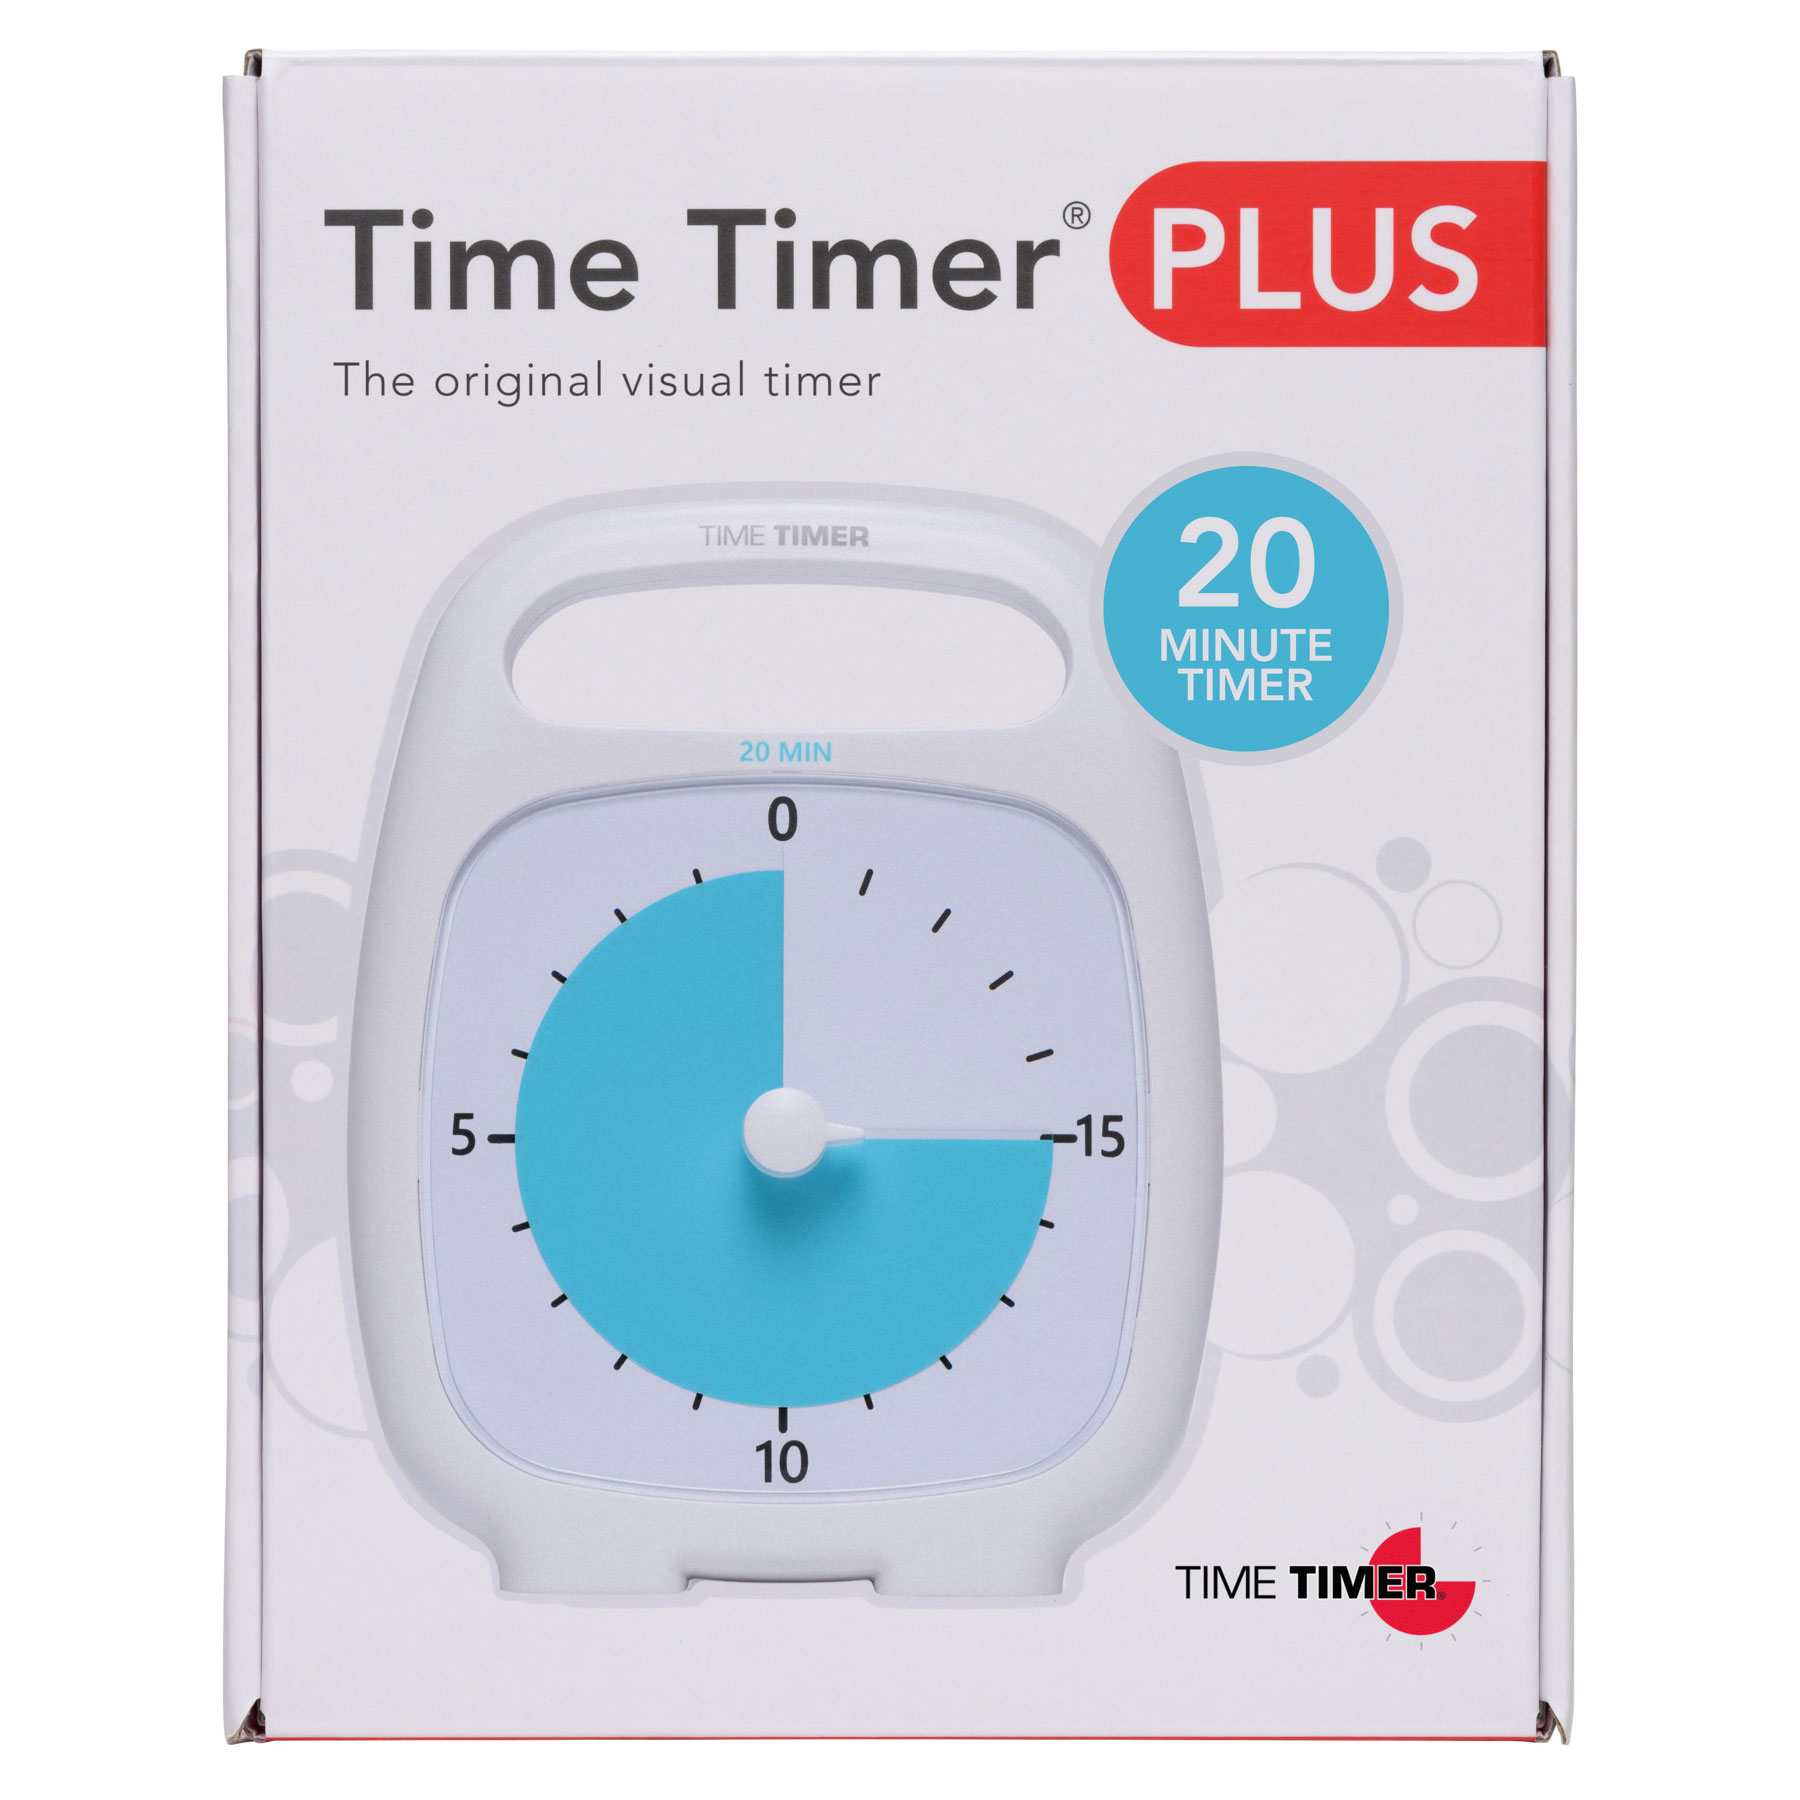 Time Timer PLUS